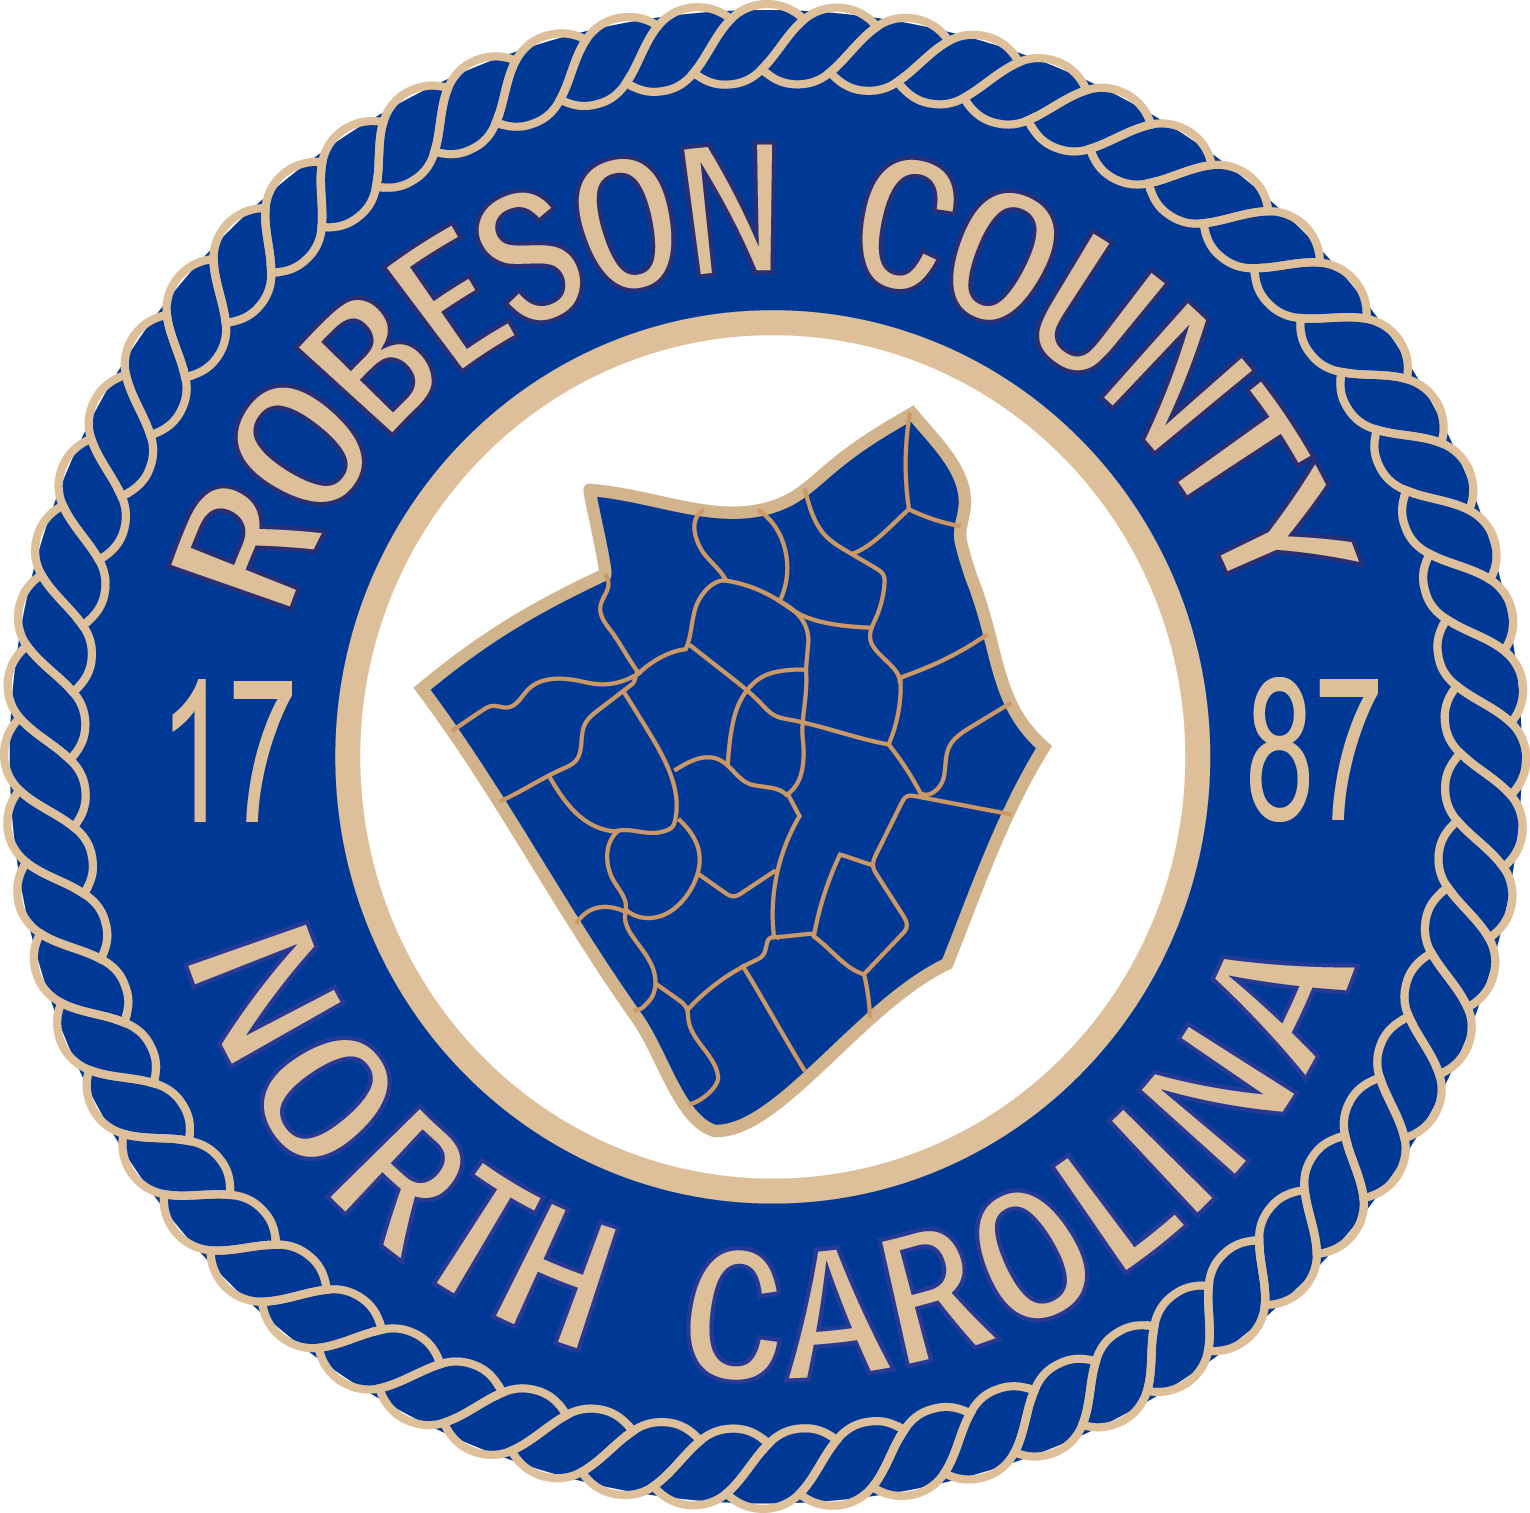 Robeson County, North Carolina logo.